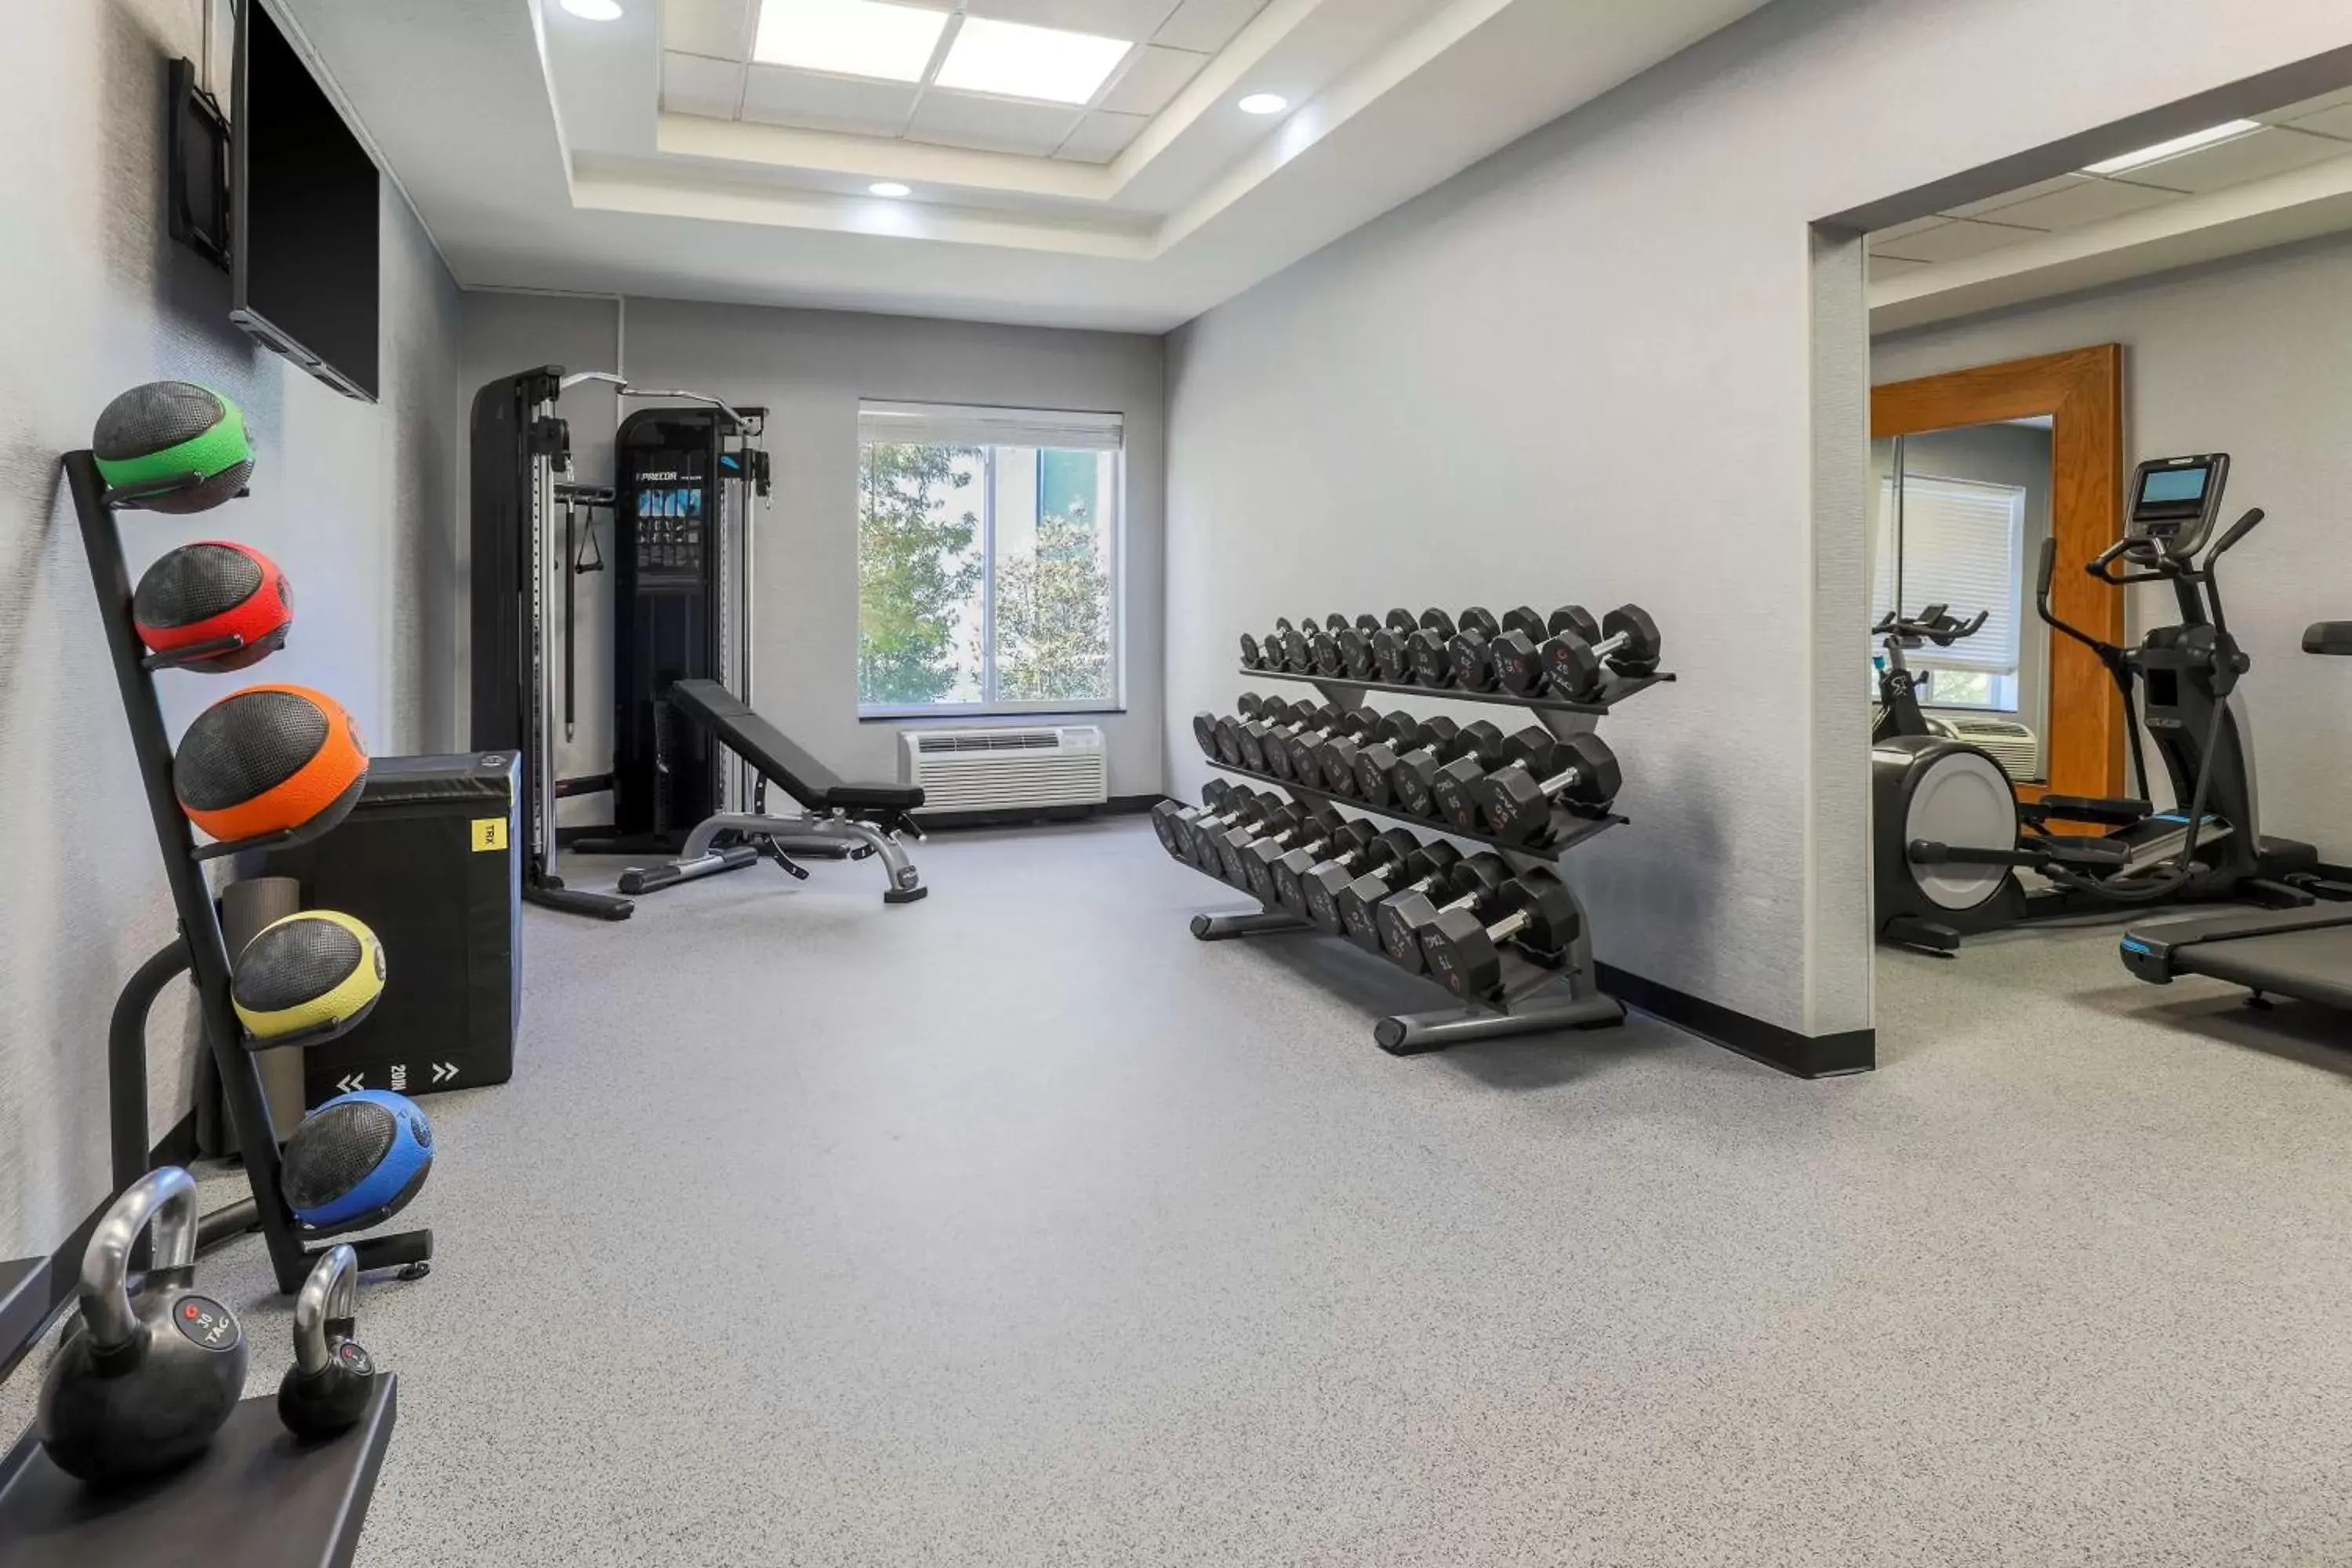 Fitness centre/facilities, Fitness Center/Facilities in Hilton Garden Inn Tulsa South